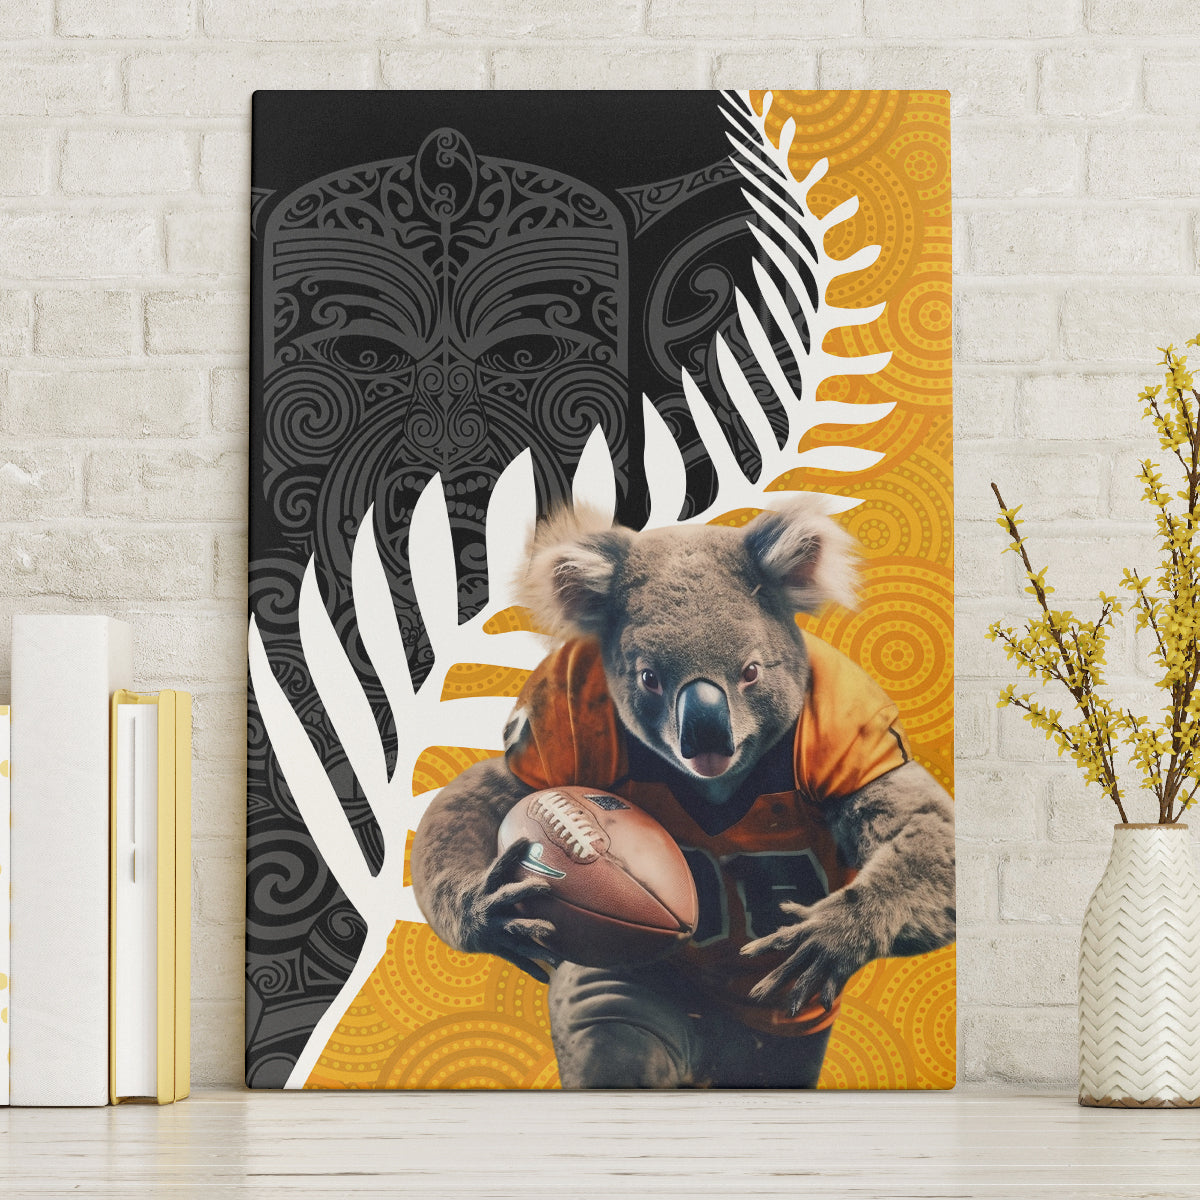 New Zealand and Australia Rugby Canvas Wall Art Koala and Maori Warrior Together